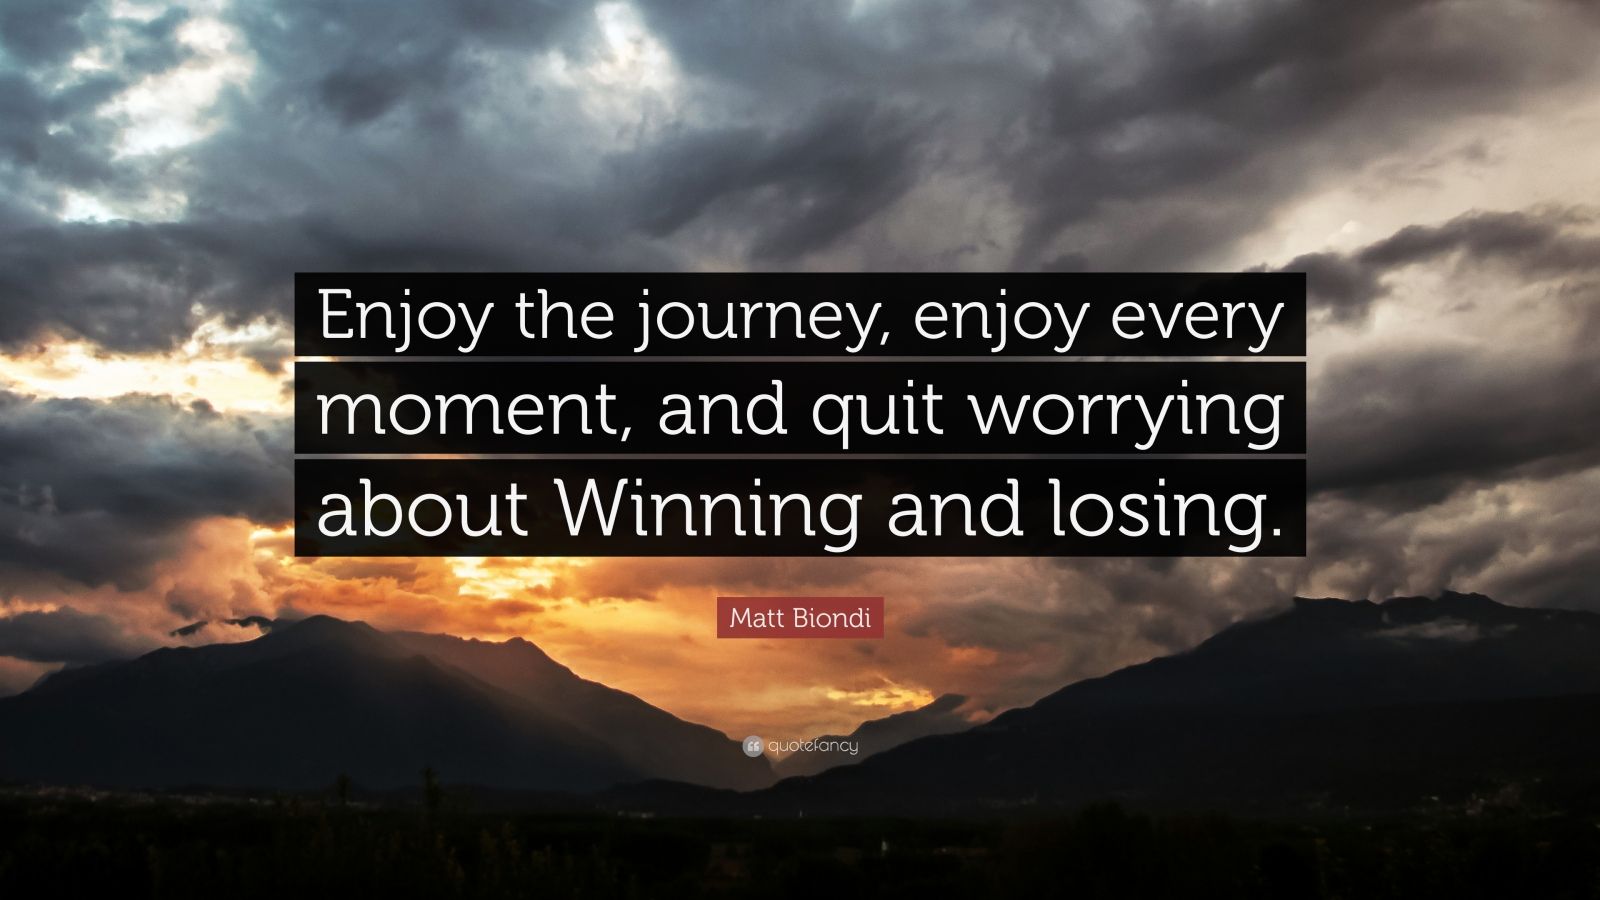 Matt Biondi Quote: “Enjoy the journey, enjoy every moment, and quit